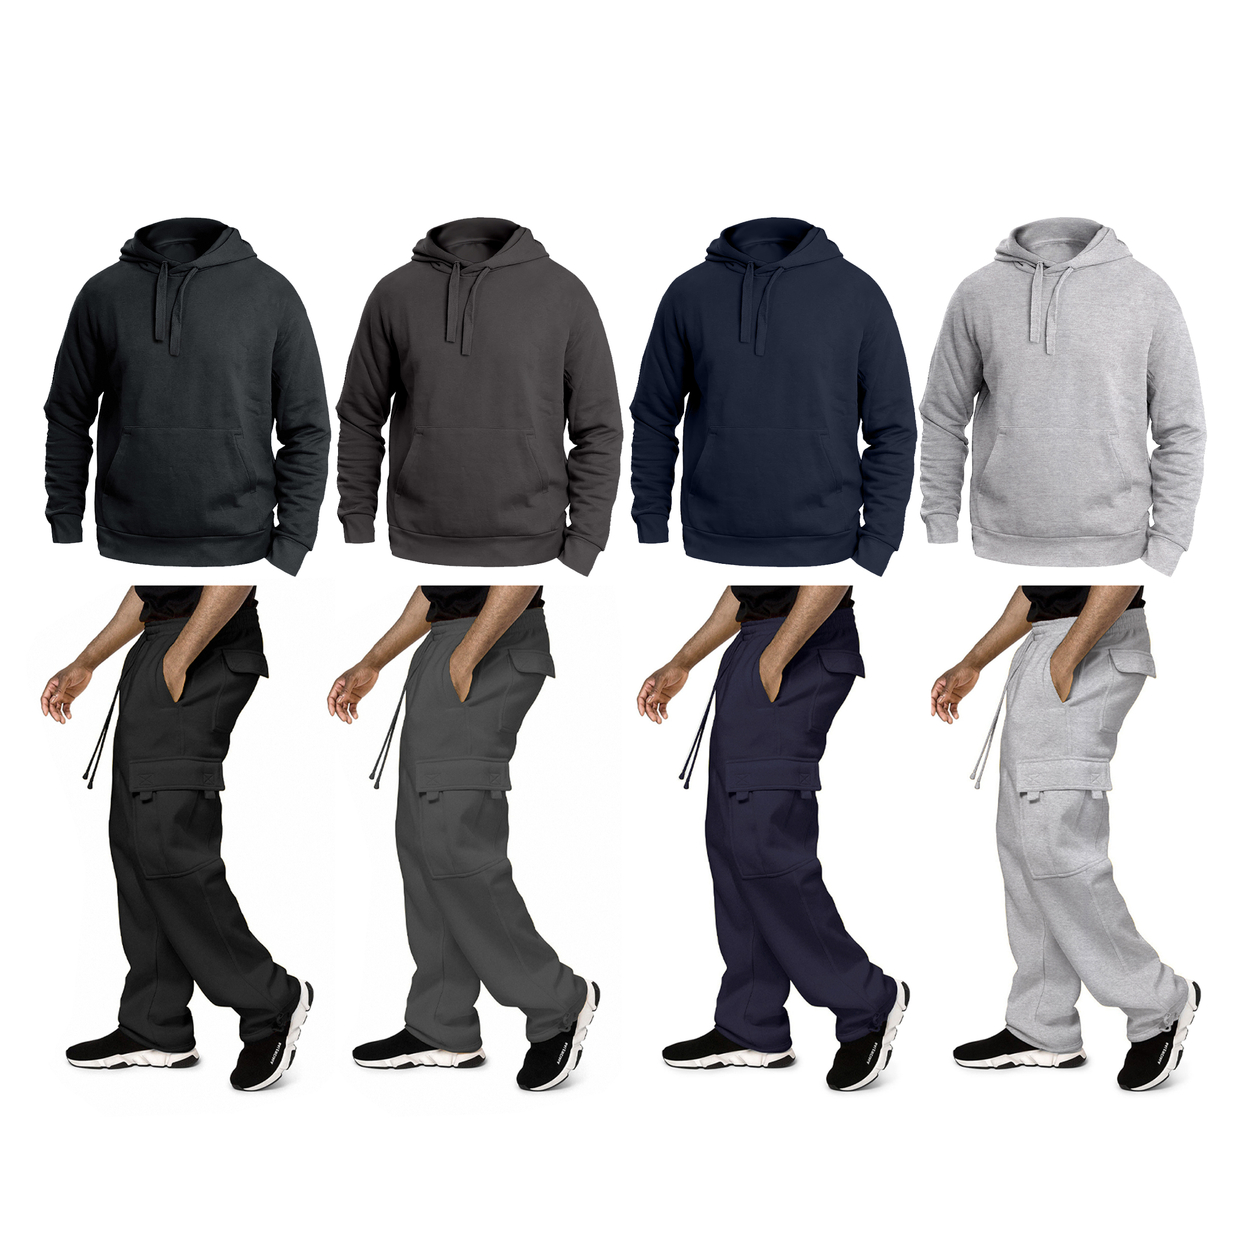 Men's Big & Tall Winter Warm Cozy Athletic Fleece Lined Multi-Pocket Cargo Sweatsuit - Charcoal, Xx-large